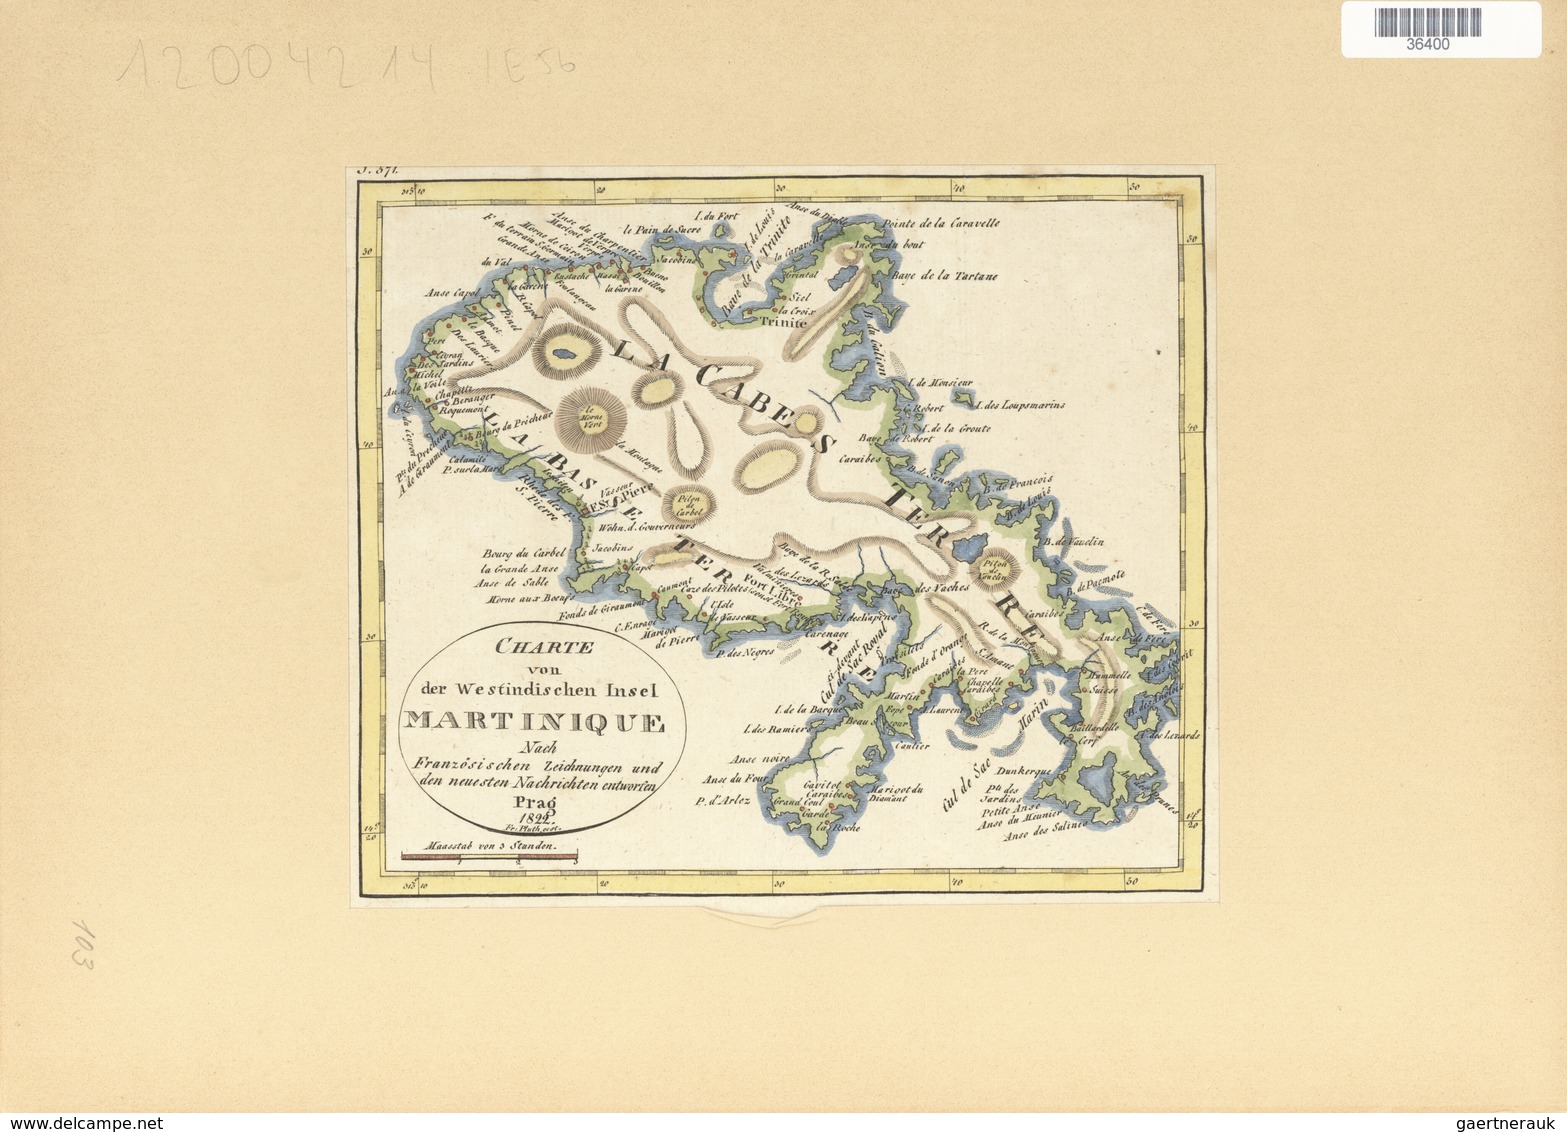 Landkarten Und Stiche: 1822. Map Of The Island Of Martinique, By One Fr. Pluth, From Prague In 1822. - Geographie